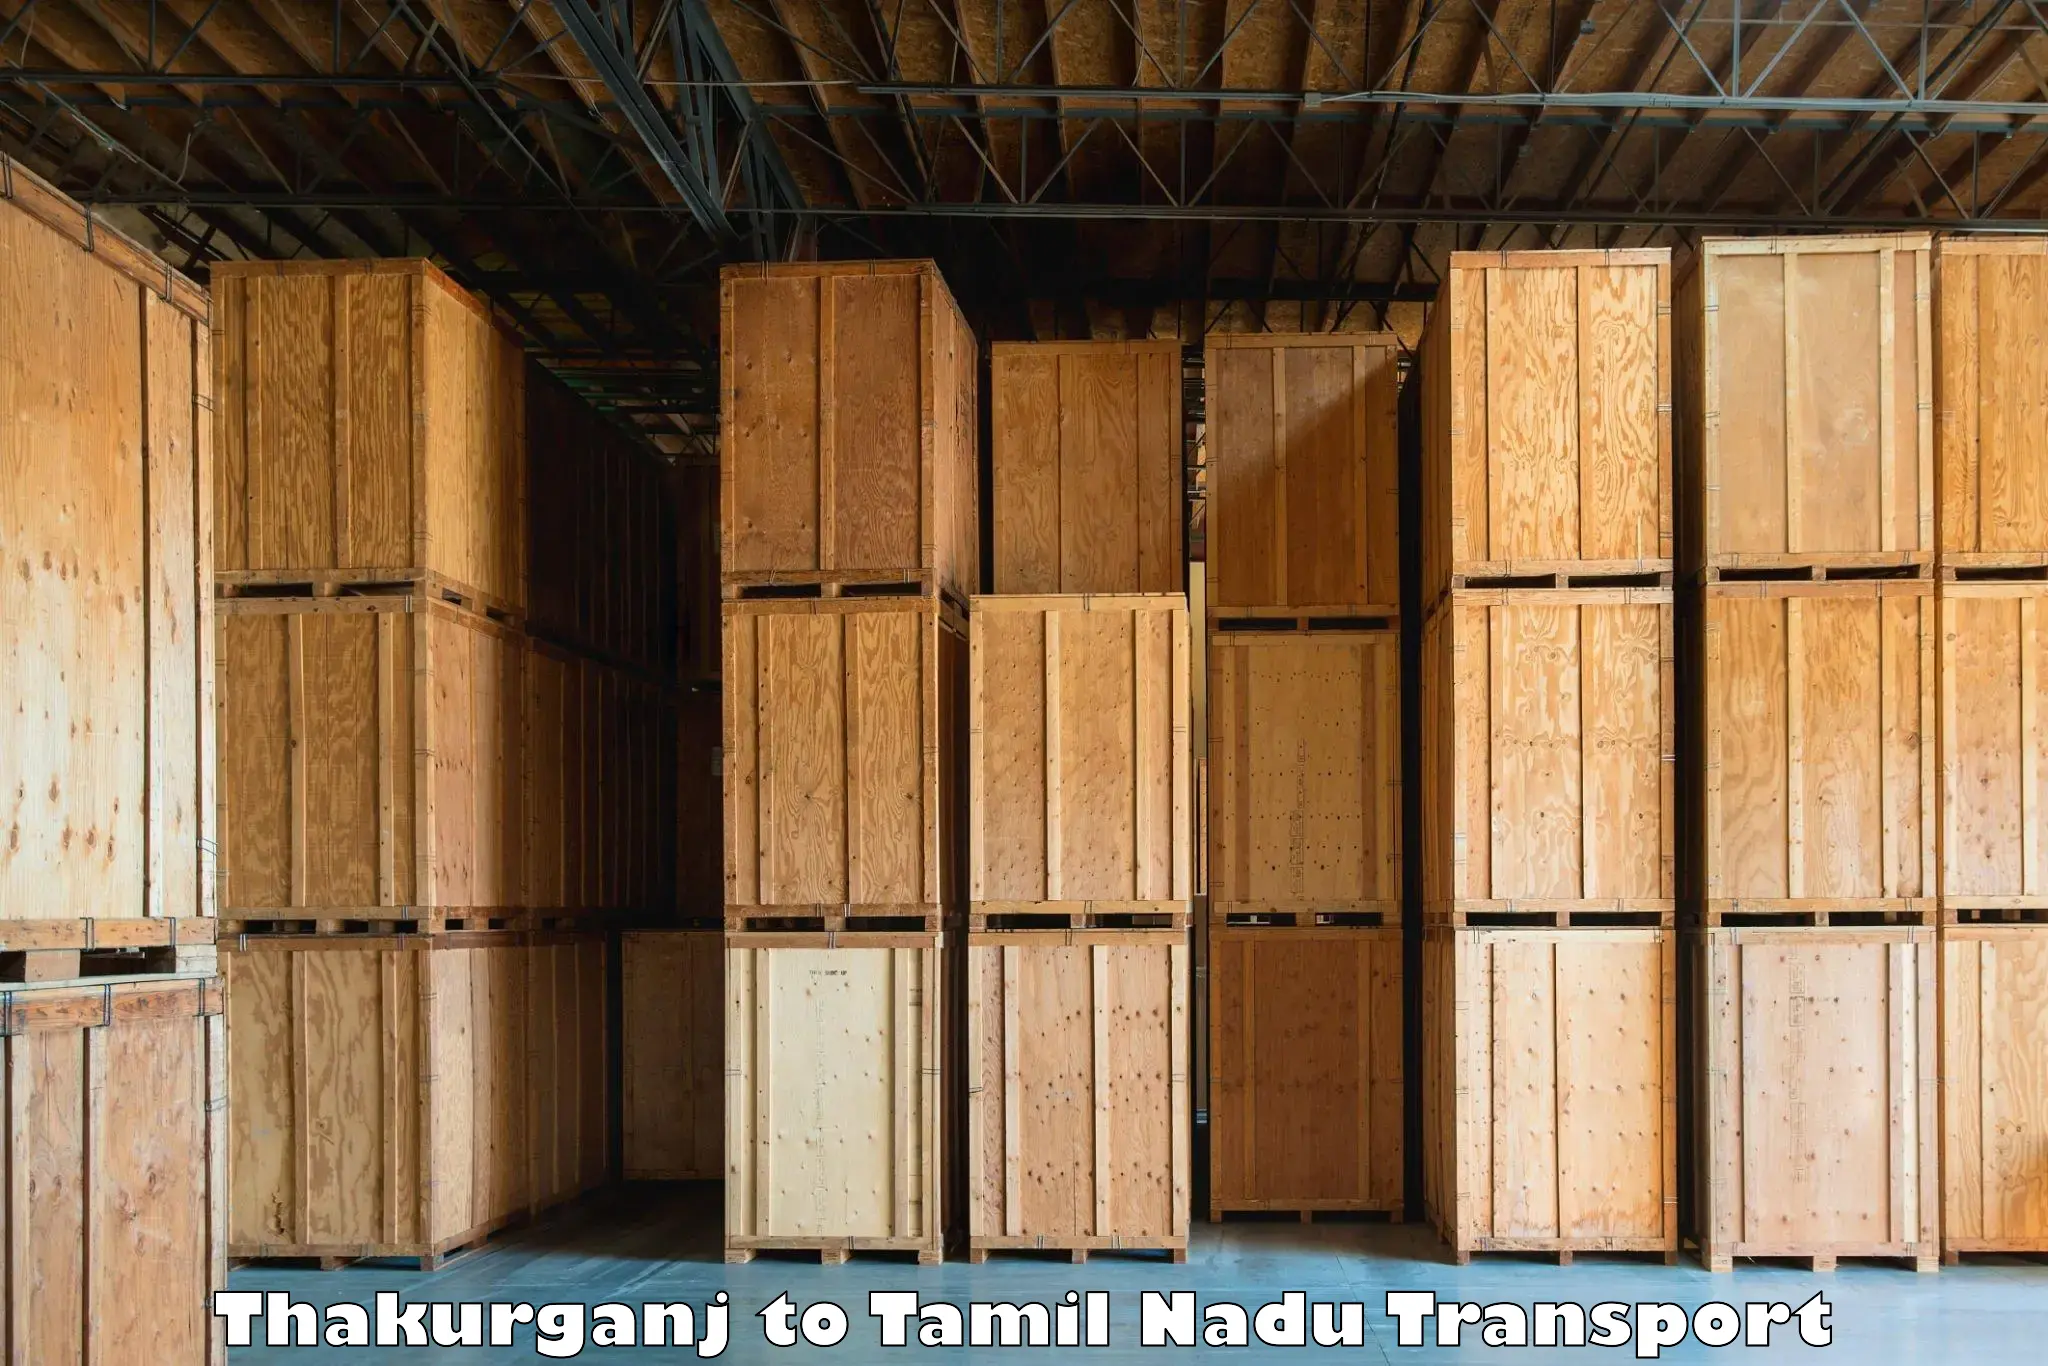 Truck transport companies in India Thakurganj to Tamil Nadu